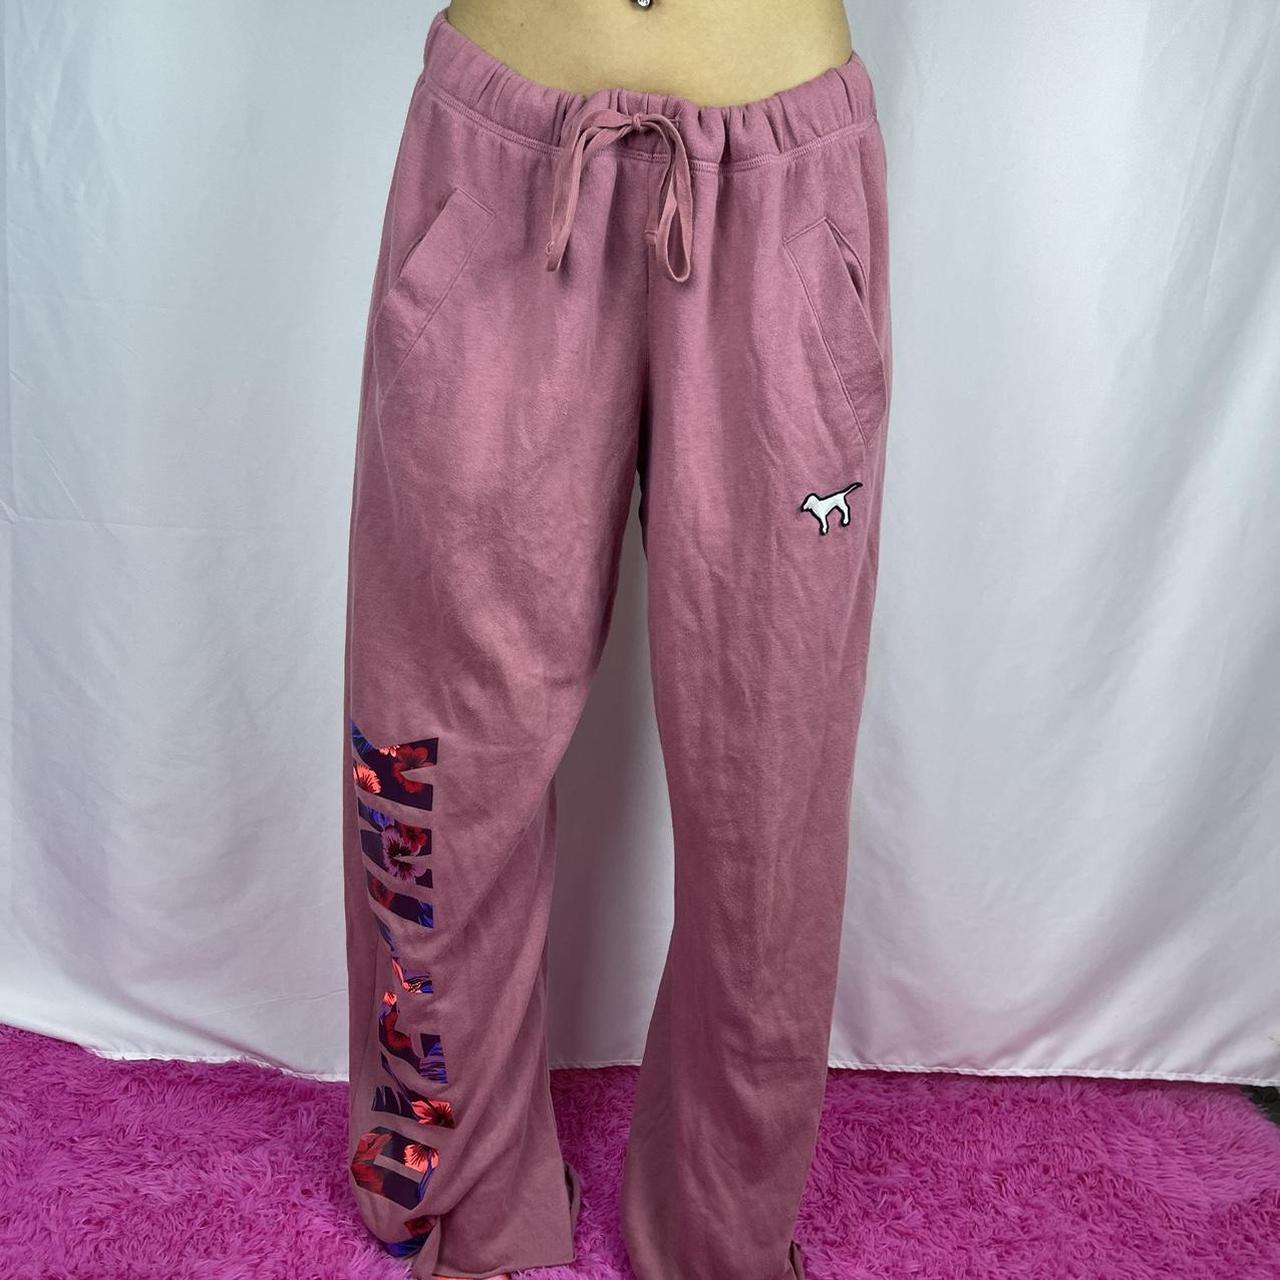 Victoria's Secret Pink Sweatpants Size Small Y2K Vintage Early 2000s